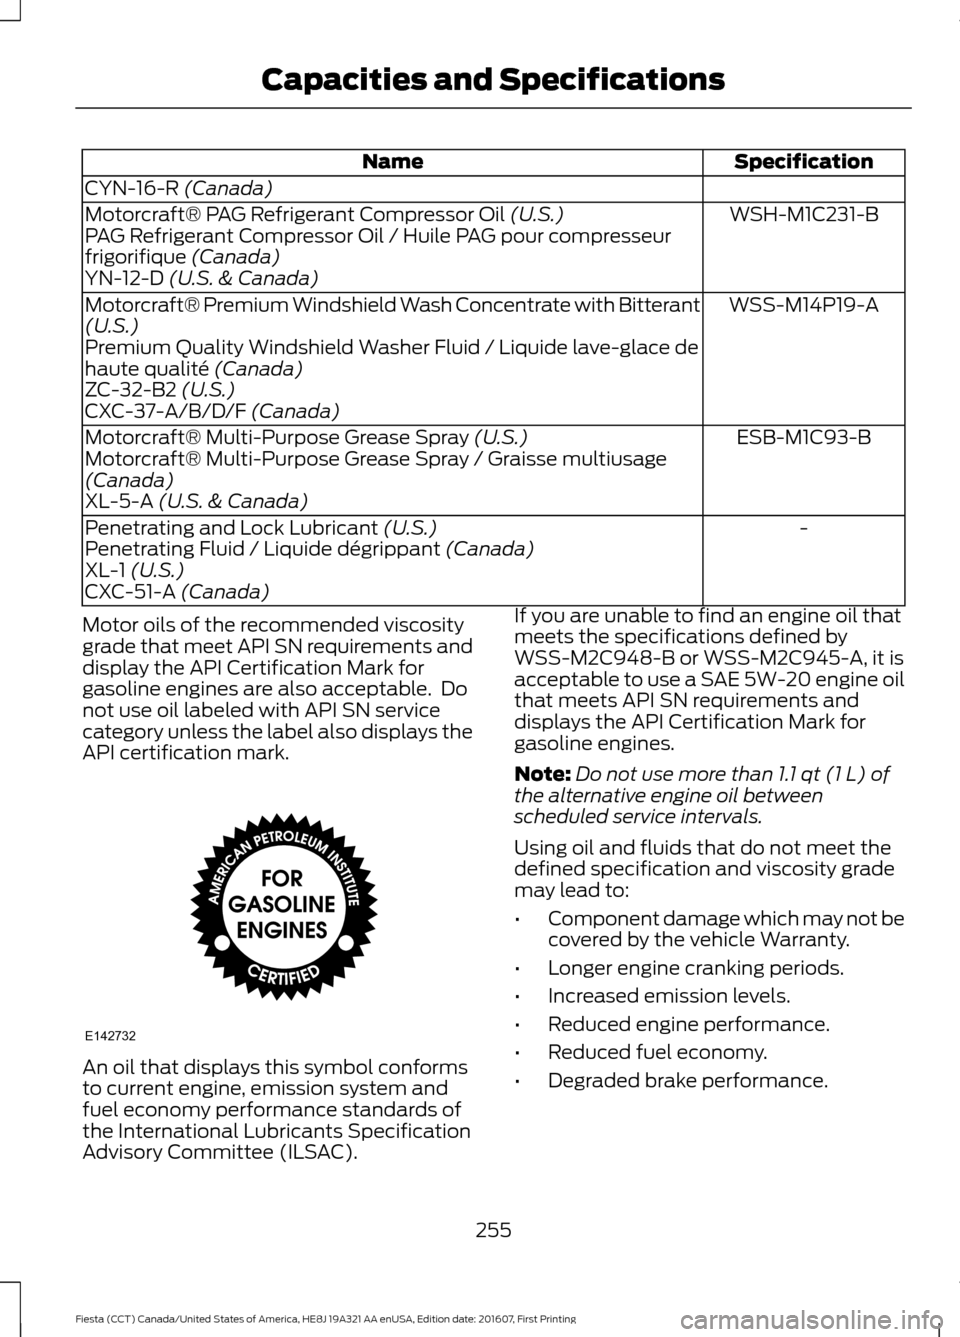 FORD FIESTA 2017 6.G Owners Manual Specification
Name
CYN-16-R (Canada) WSH-M1C231-B
Motorcraft® PAG Refrigerant Compressor Oil
 (U.S.)
PAG Refrigerant Compressor Oil / Huile PAG pour compresseur
frigorifique
 (Canada)
YN-12-D (U.S. &